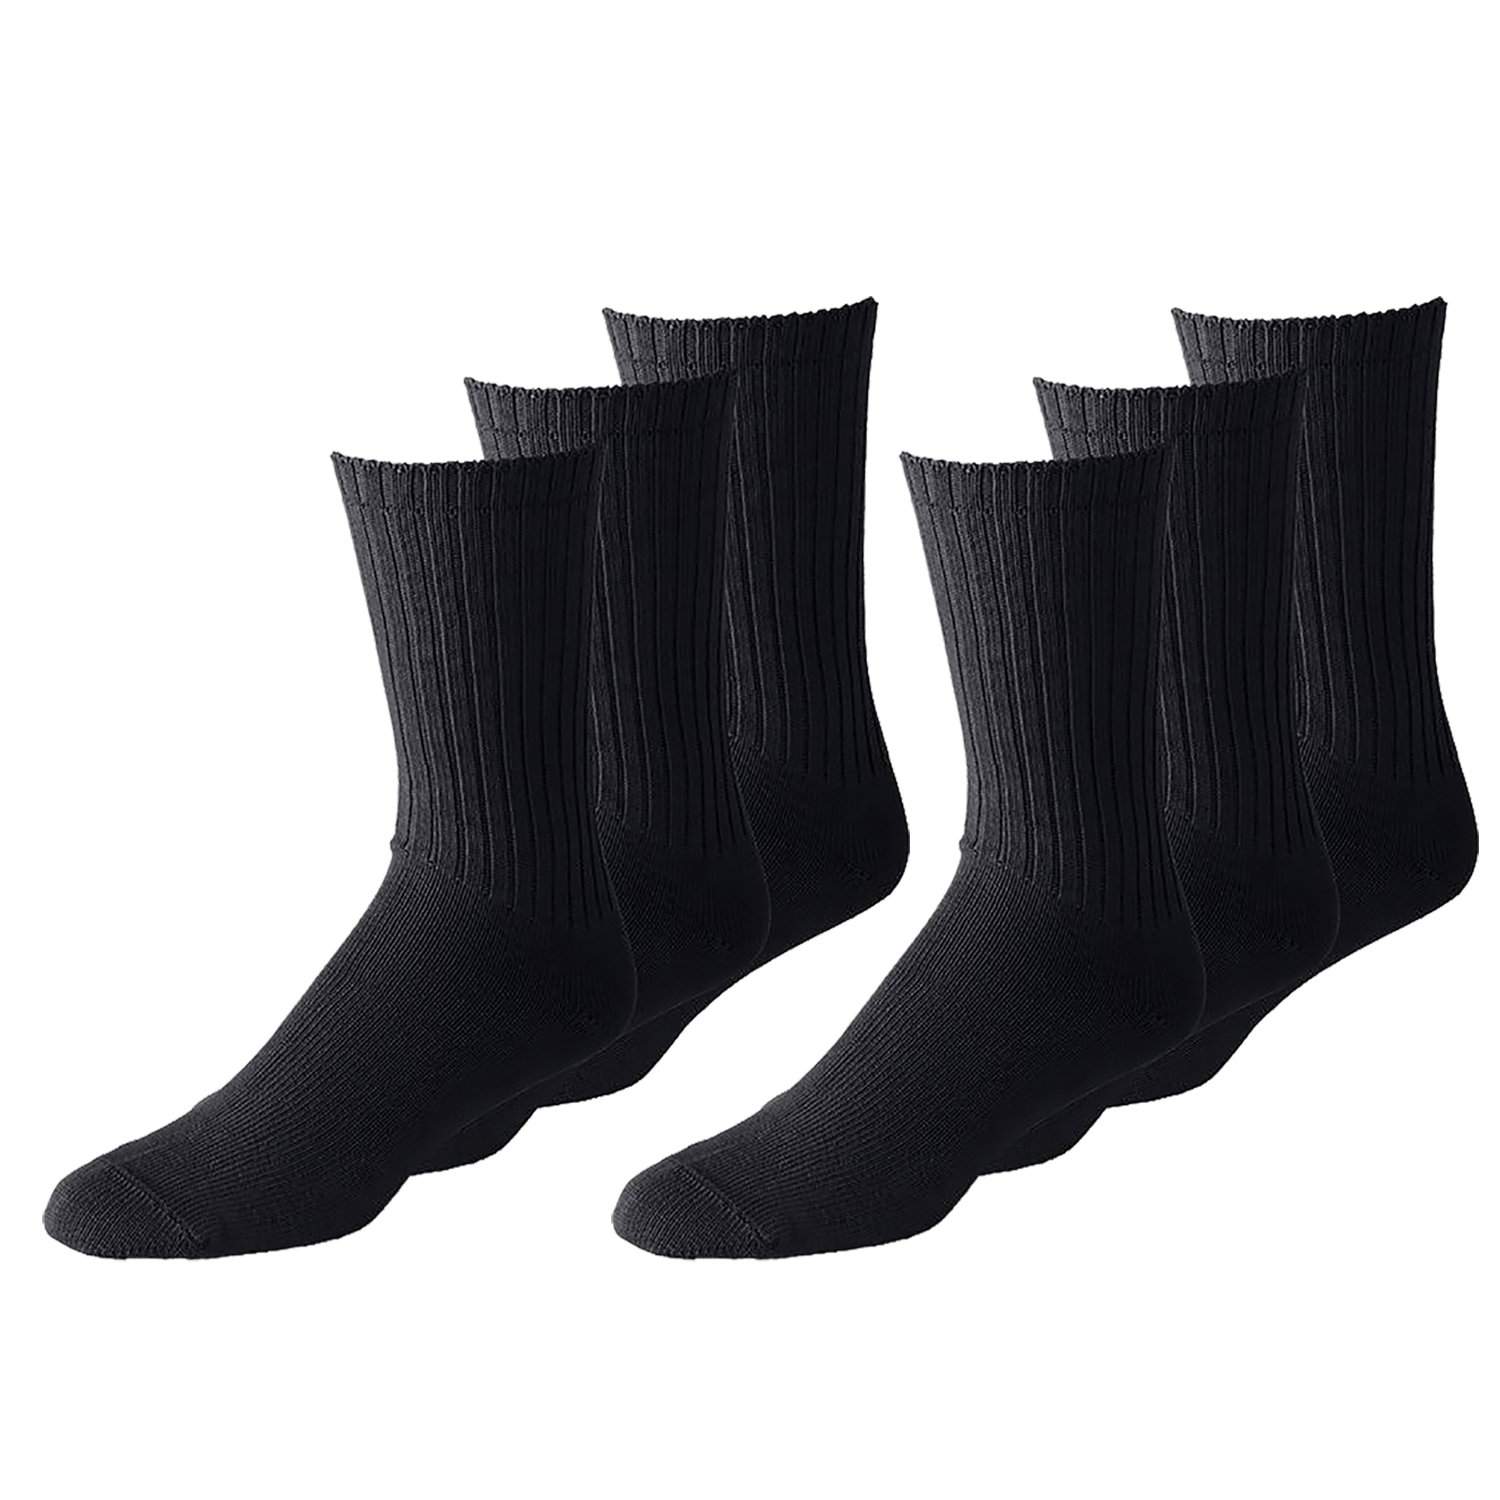 Jordefano Unisex Crew Athletic Sports Cotton Socks 35 Pack